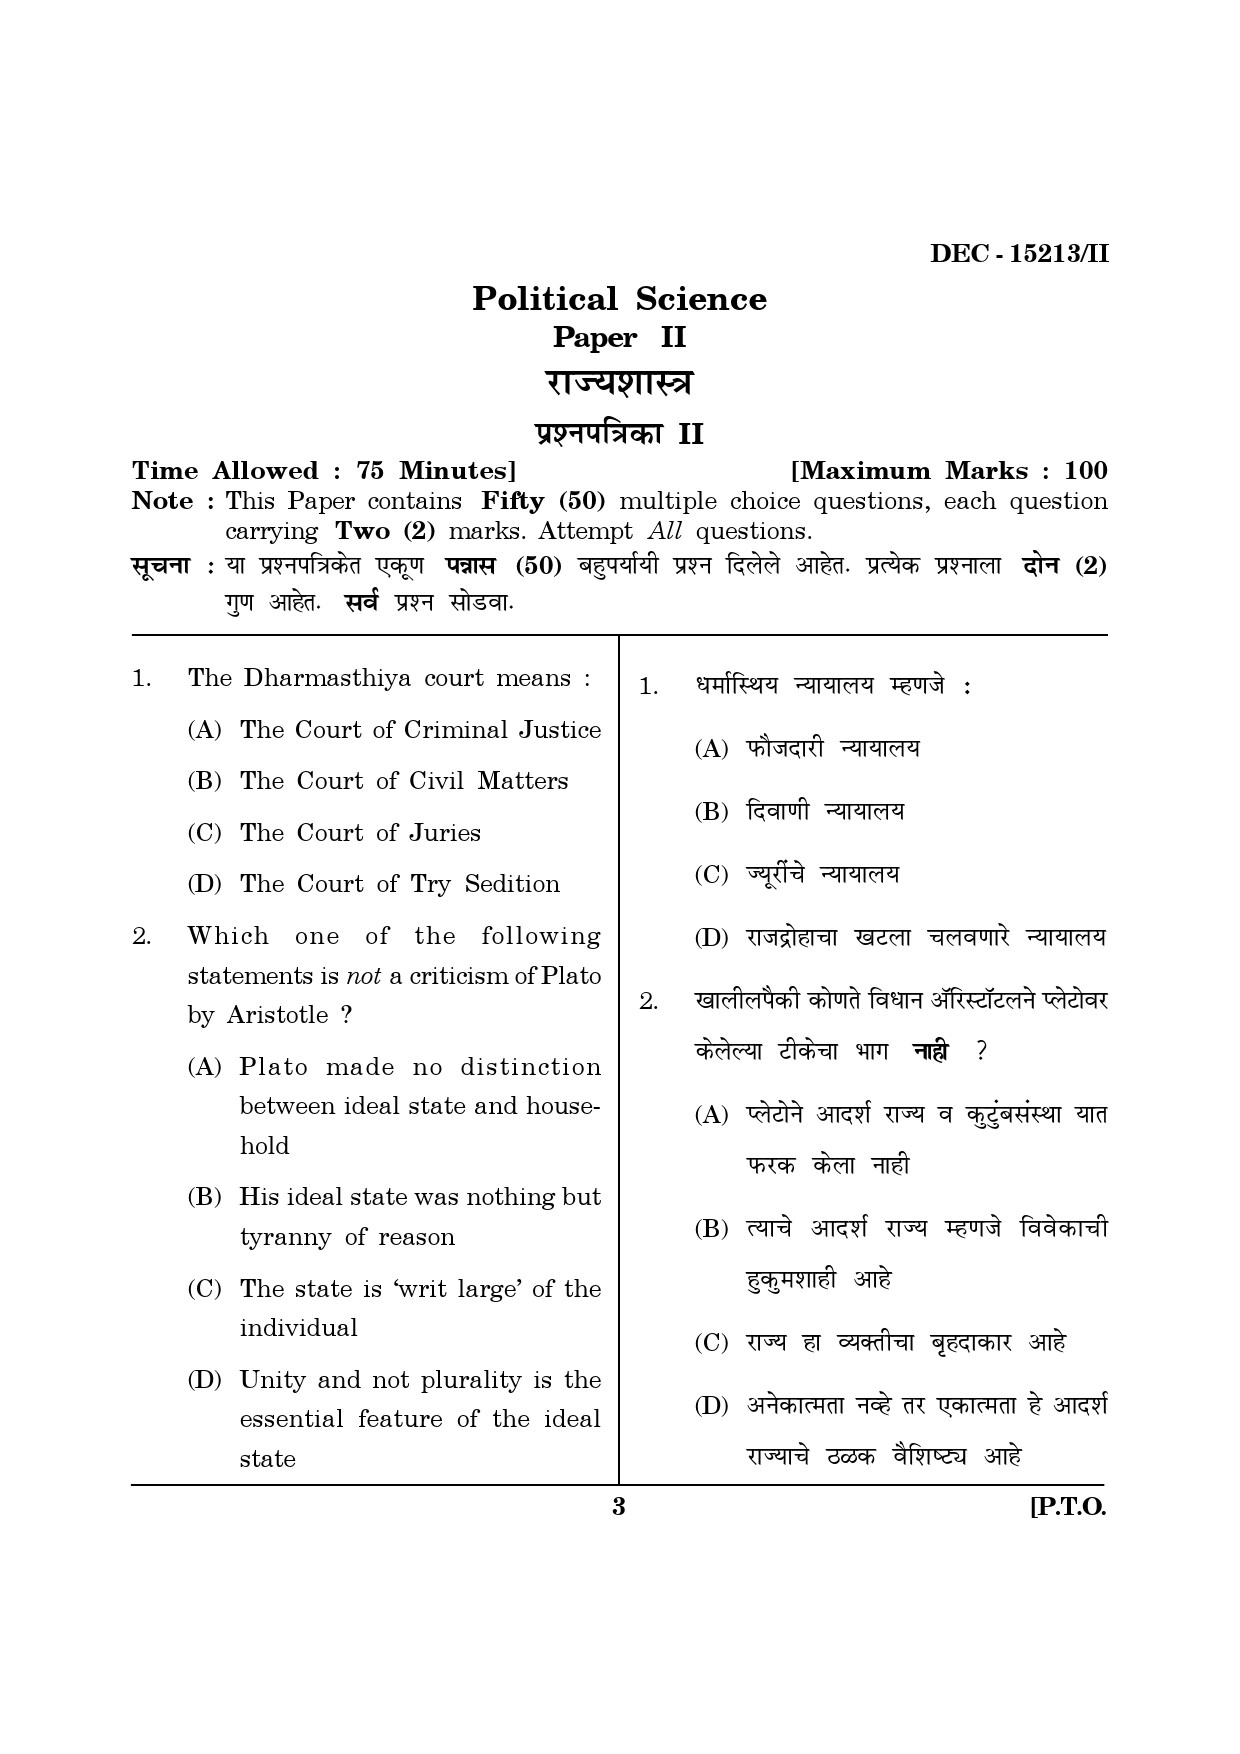 Maharashtra SET Political Science Question Paper II December 2013 2